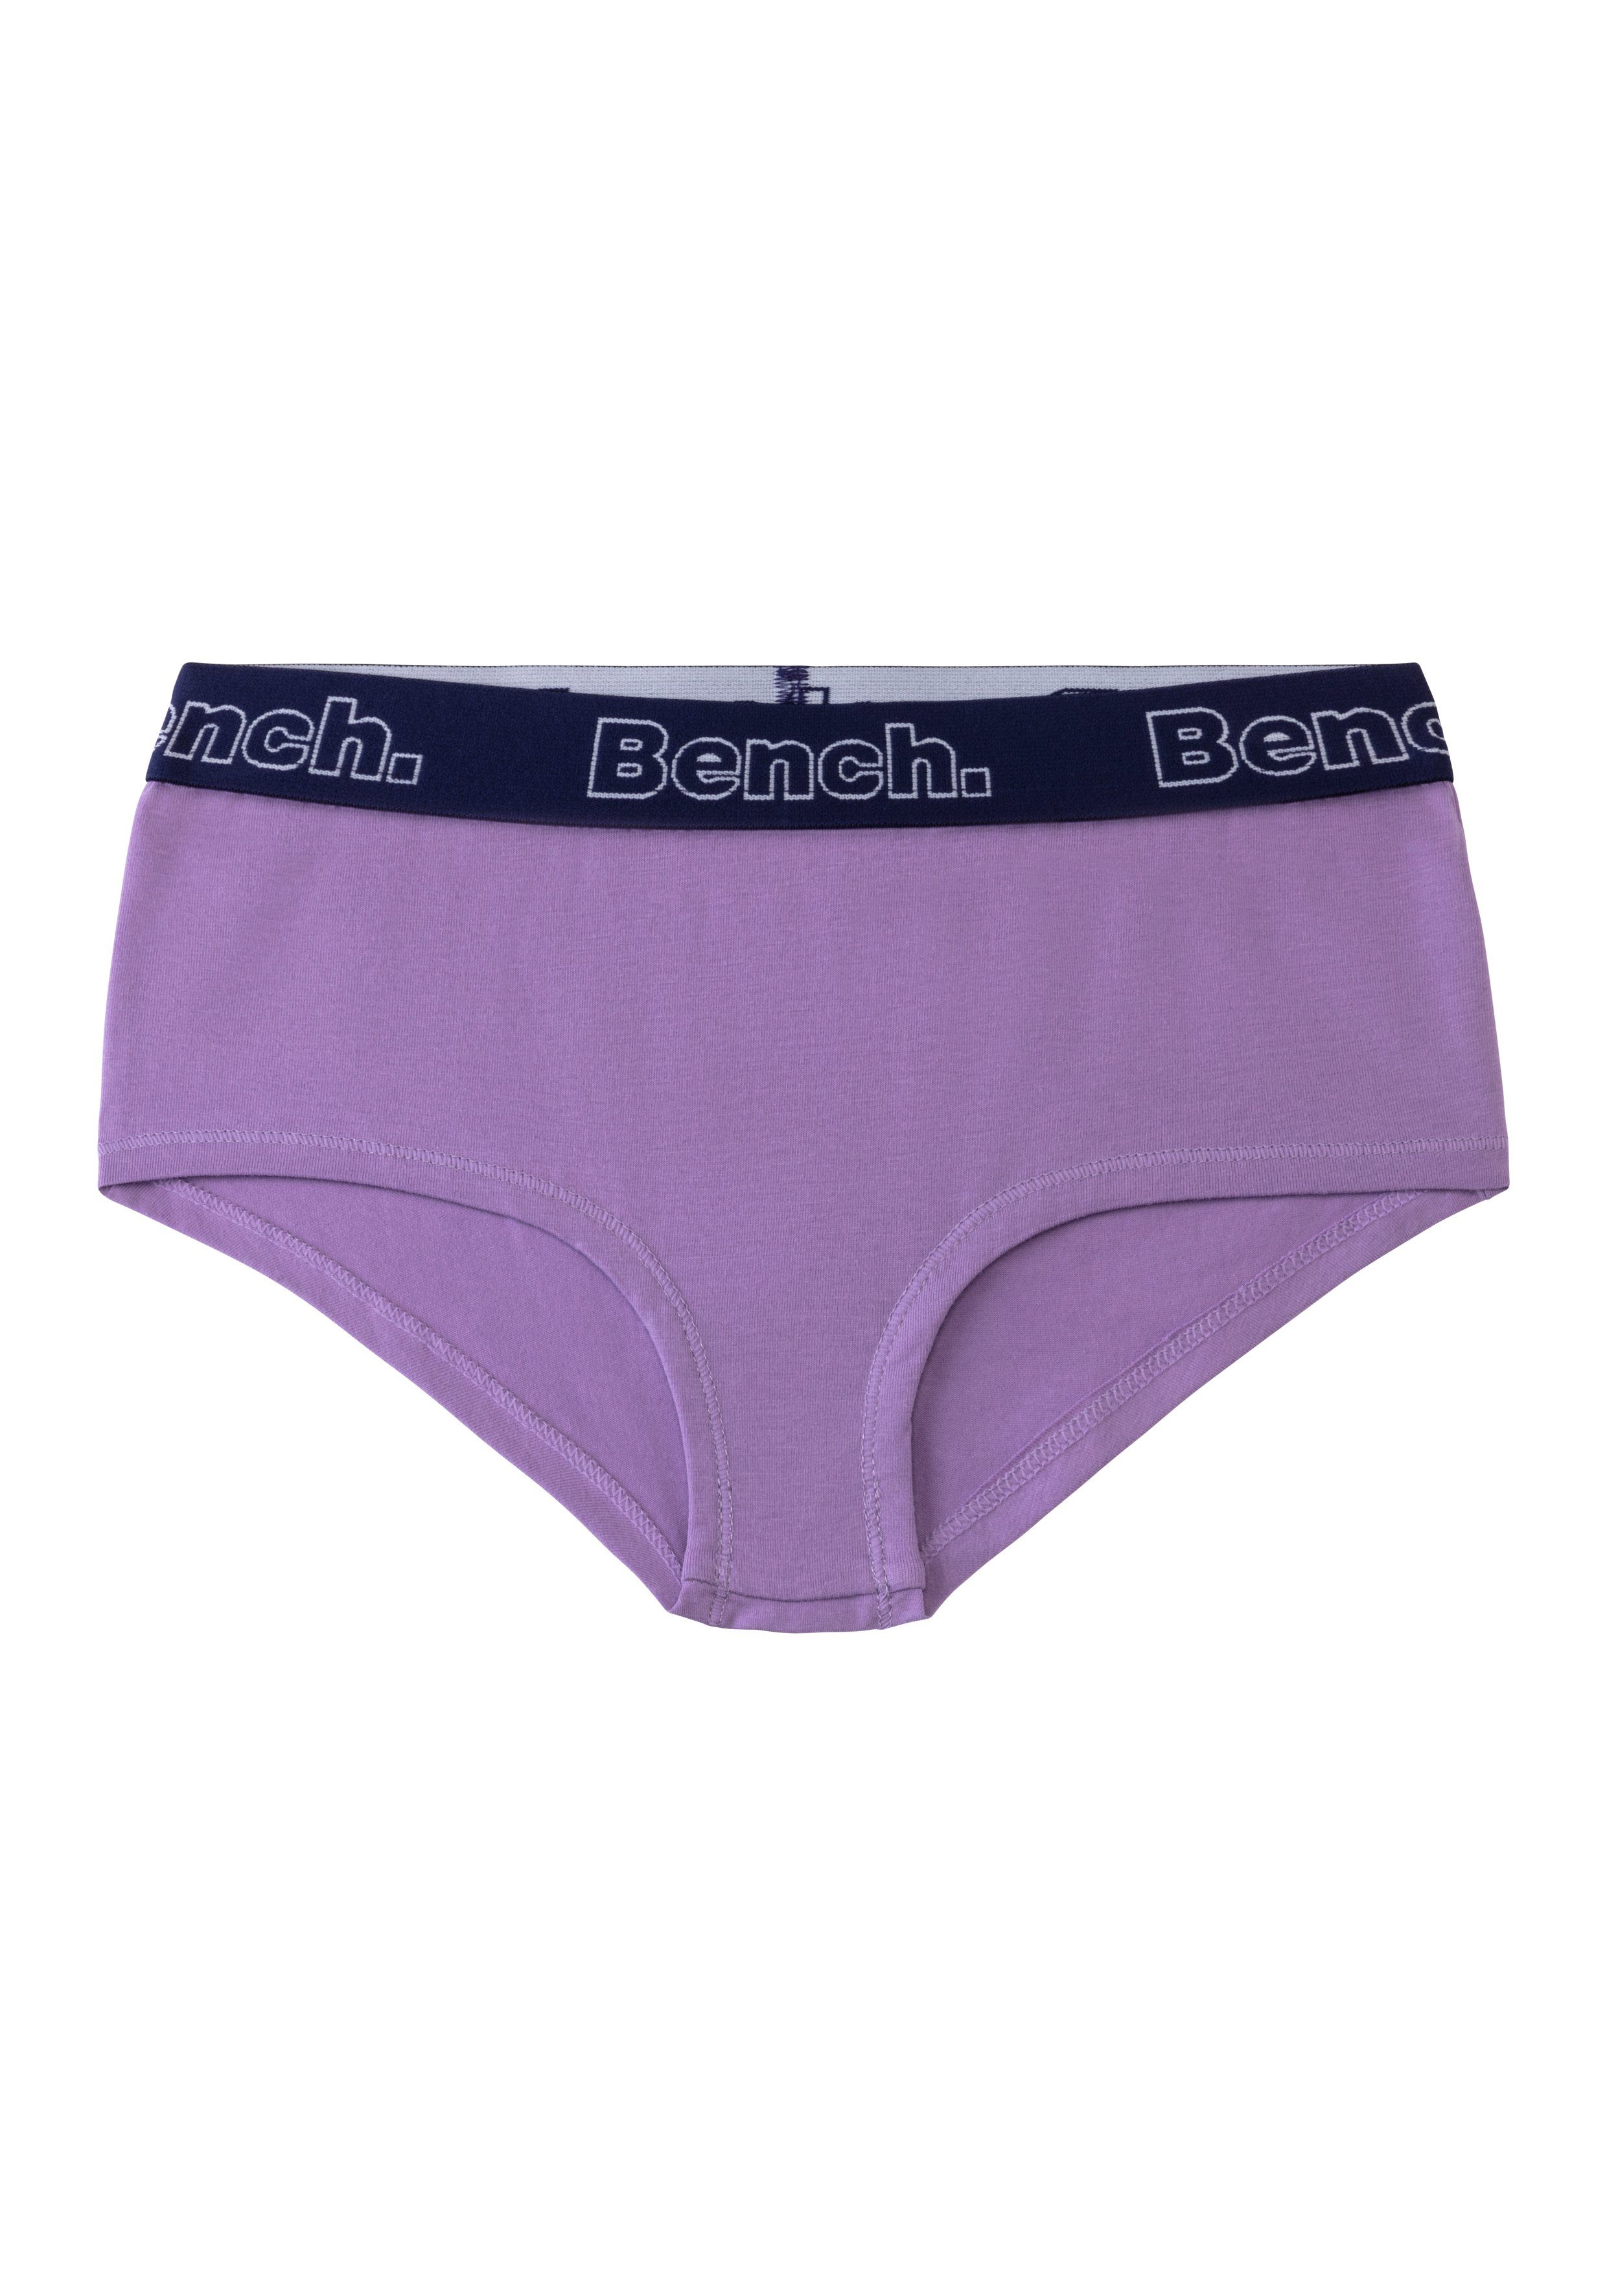 Bench. Panty (Packung, / / 3-St) flieder mit kontrastfarbigem lila navy Webbund